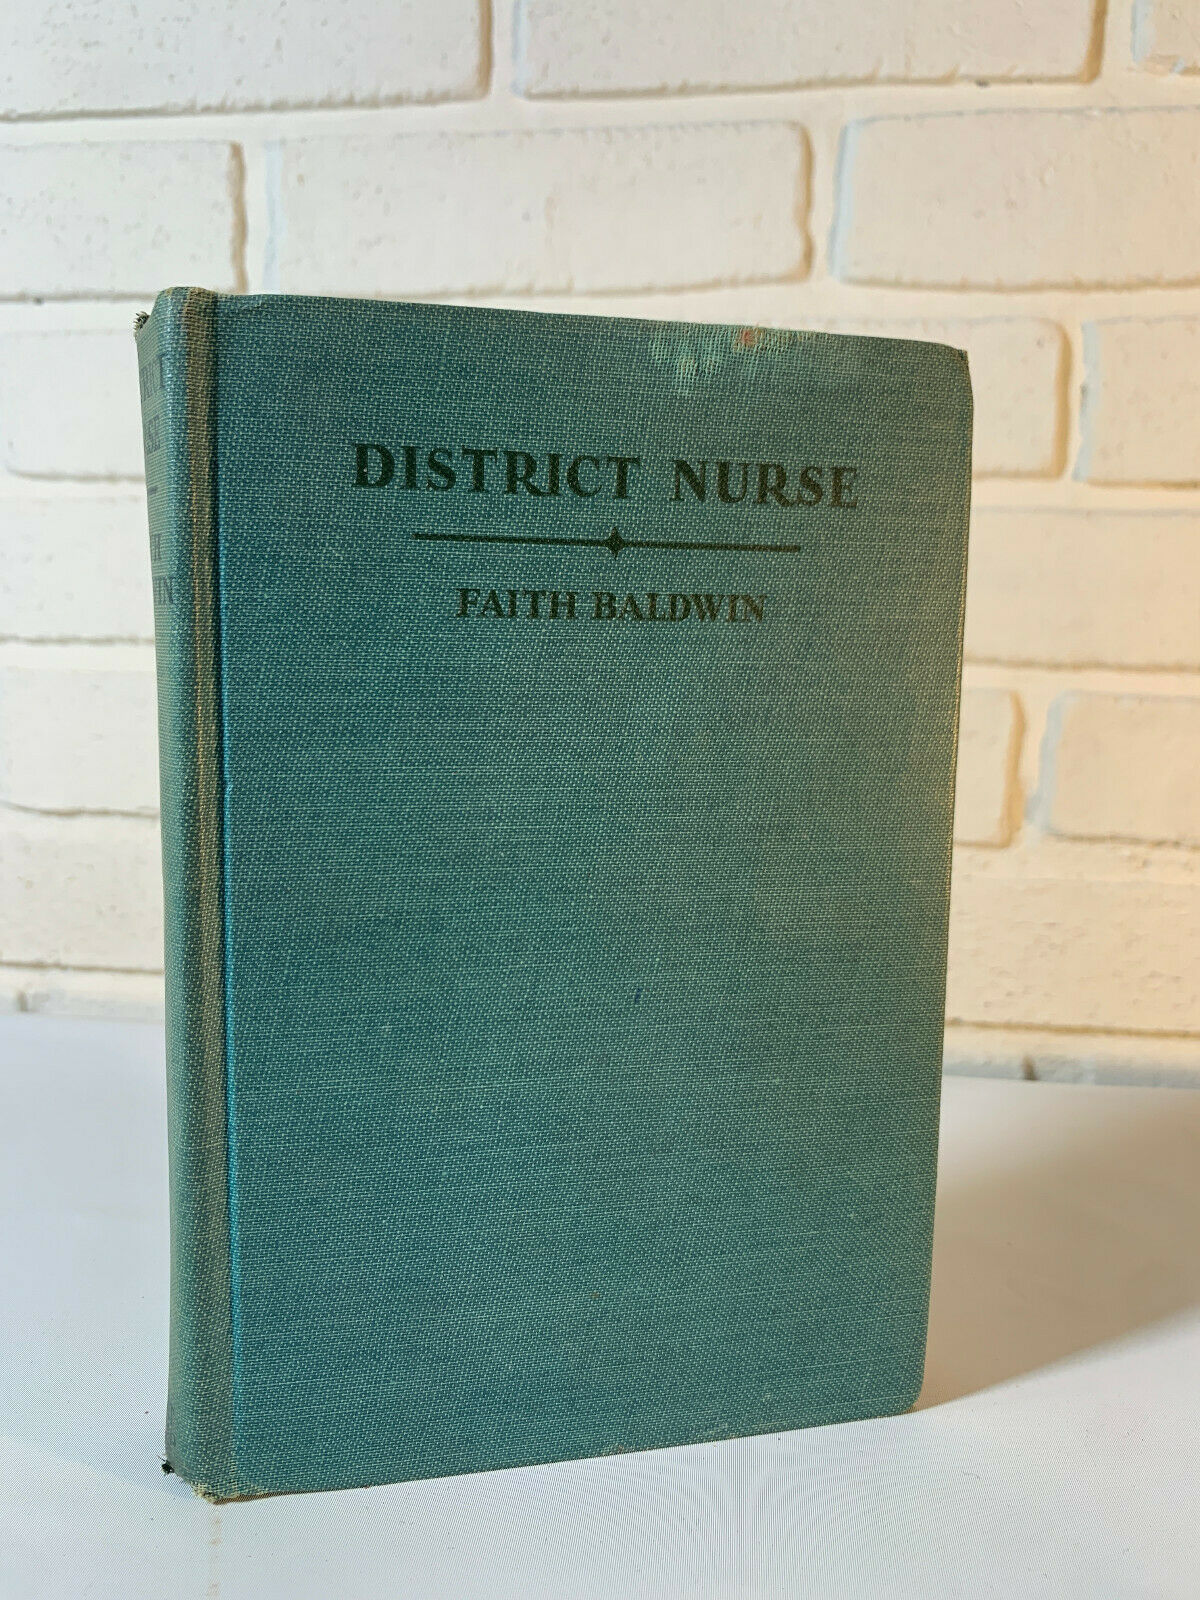 District Nurse by Faith Baldwin 1932 Hardcover Vintage (C6)